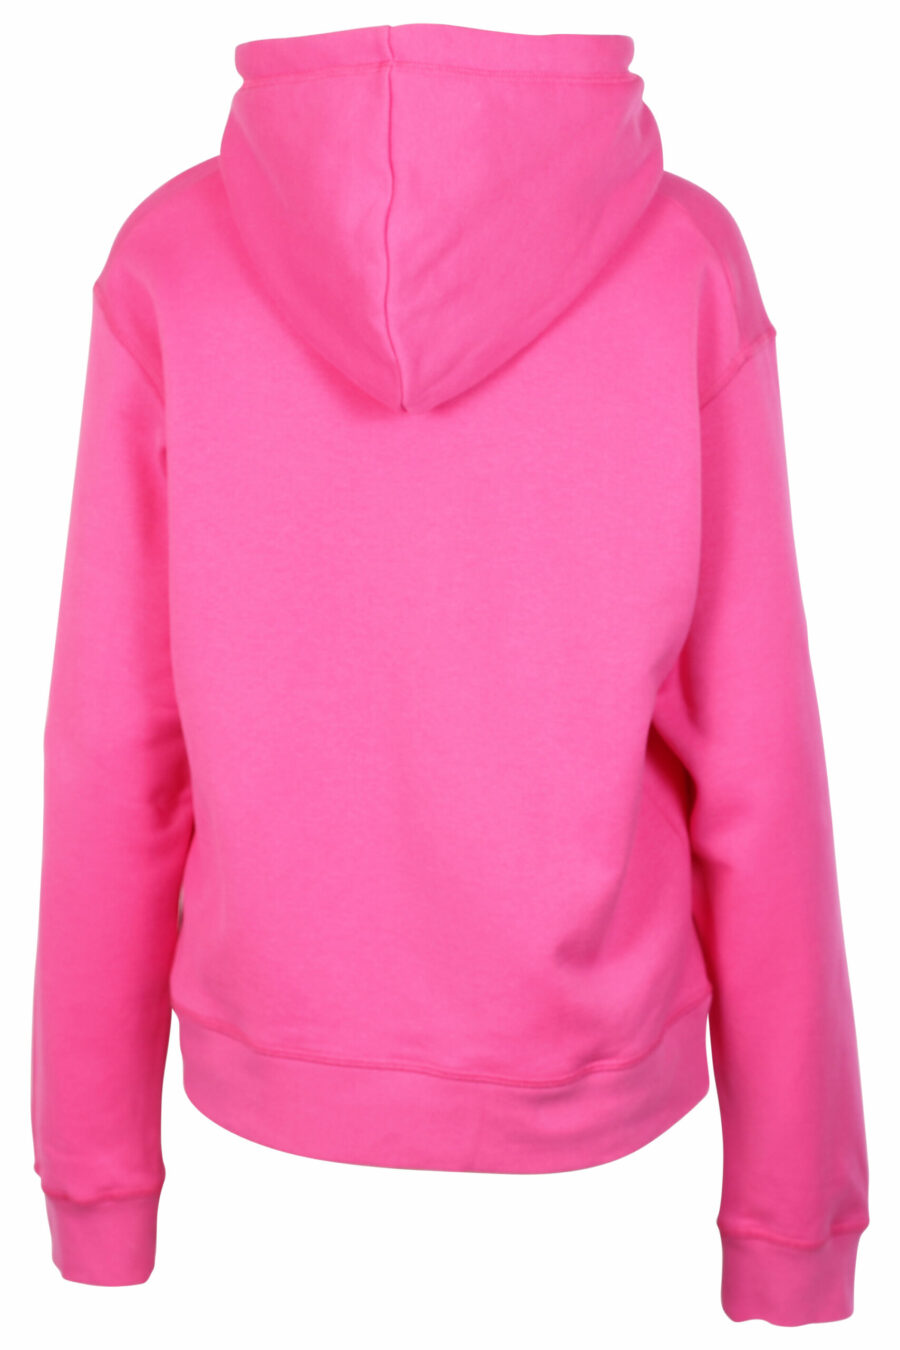 Fuchsiafarbenes Kapuzensweatshirt mit zentralem "Icon"-Minilogo - 8054148005221 3 skaliert